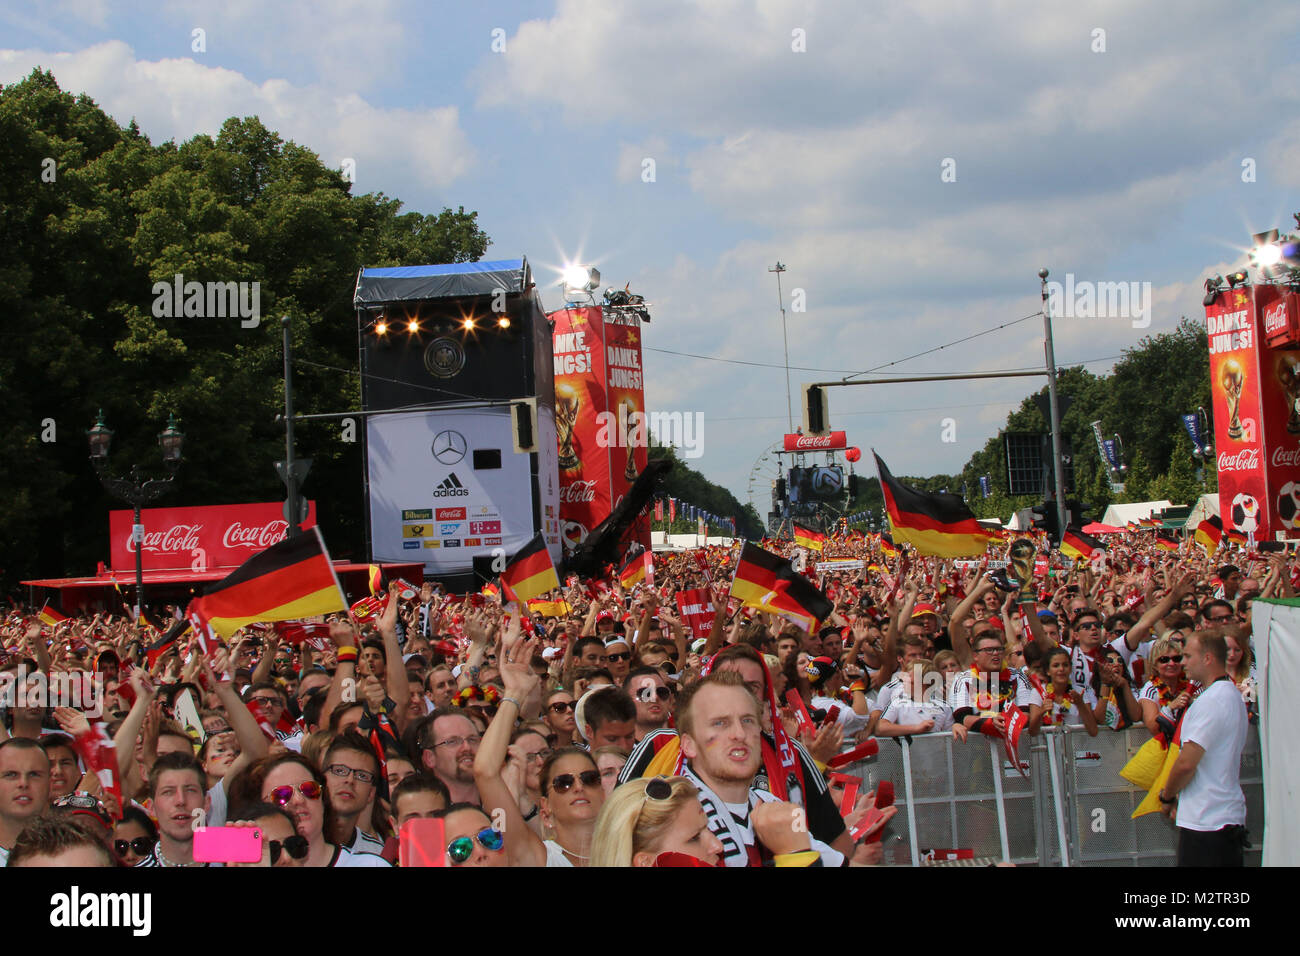 Ventiladores, Empfang der deutschen Fussballmannschaft nach dem Gewinn des Weltmeistertitels auf der Fanmeile en Berlín, 15.07.2014 Foto de stock